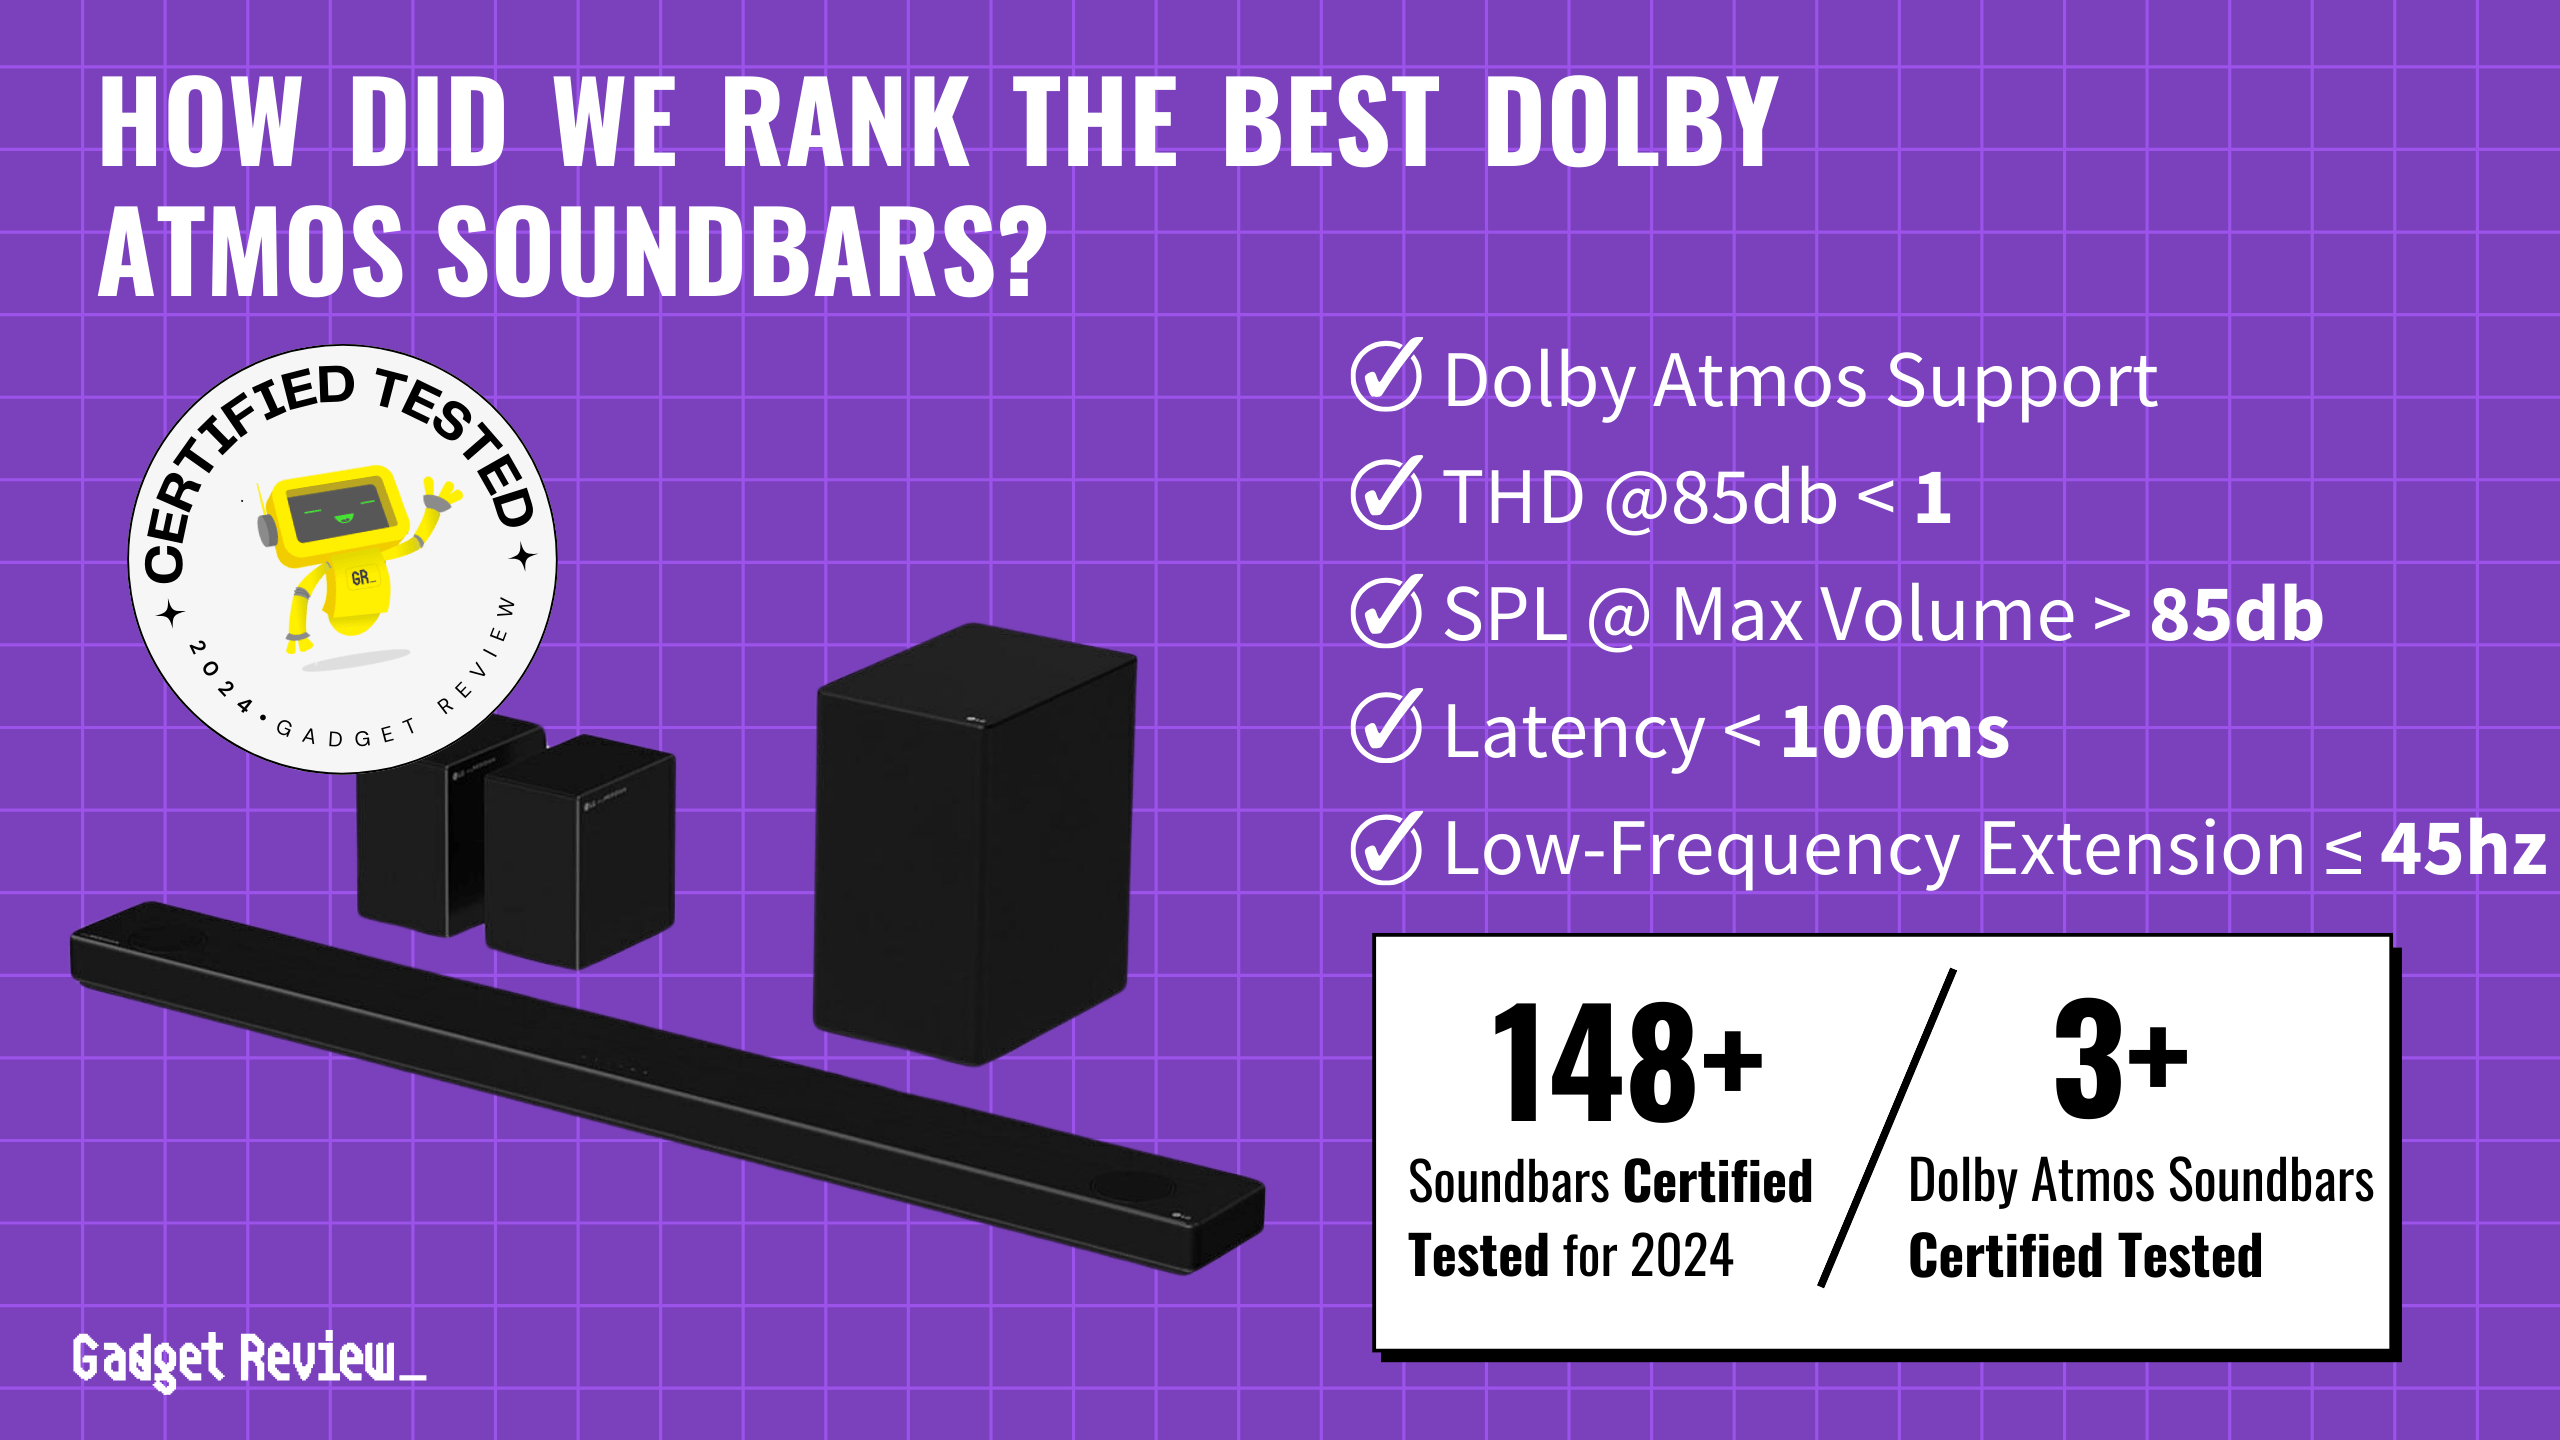 best dolby atmos soundbar guide that shows the top best soundbar model